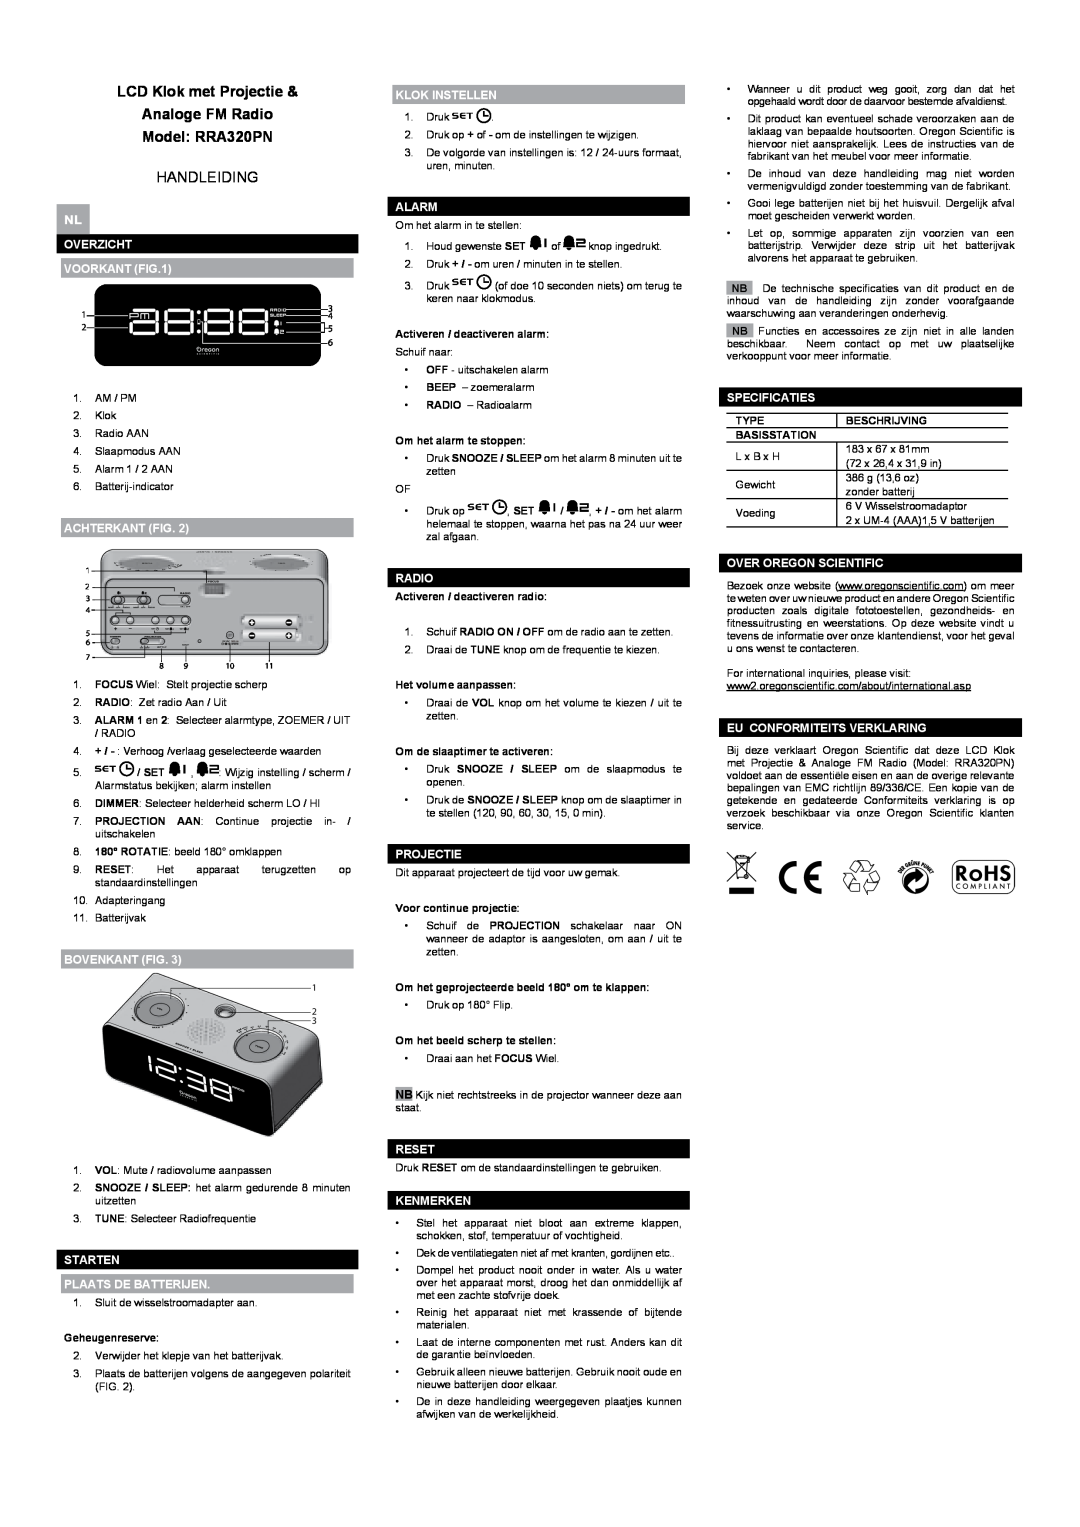 Oregon Scientific user manual LCD Klok met Projectie Analoge FM Radio Model RRA320PN, Handleiding 